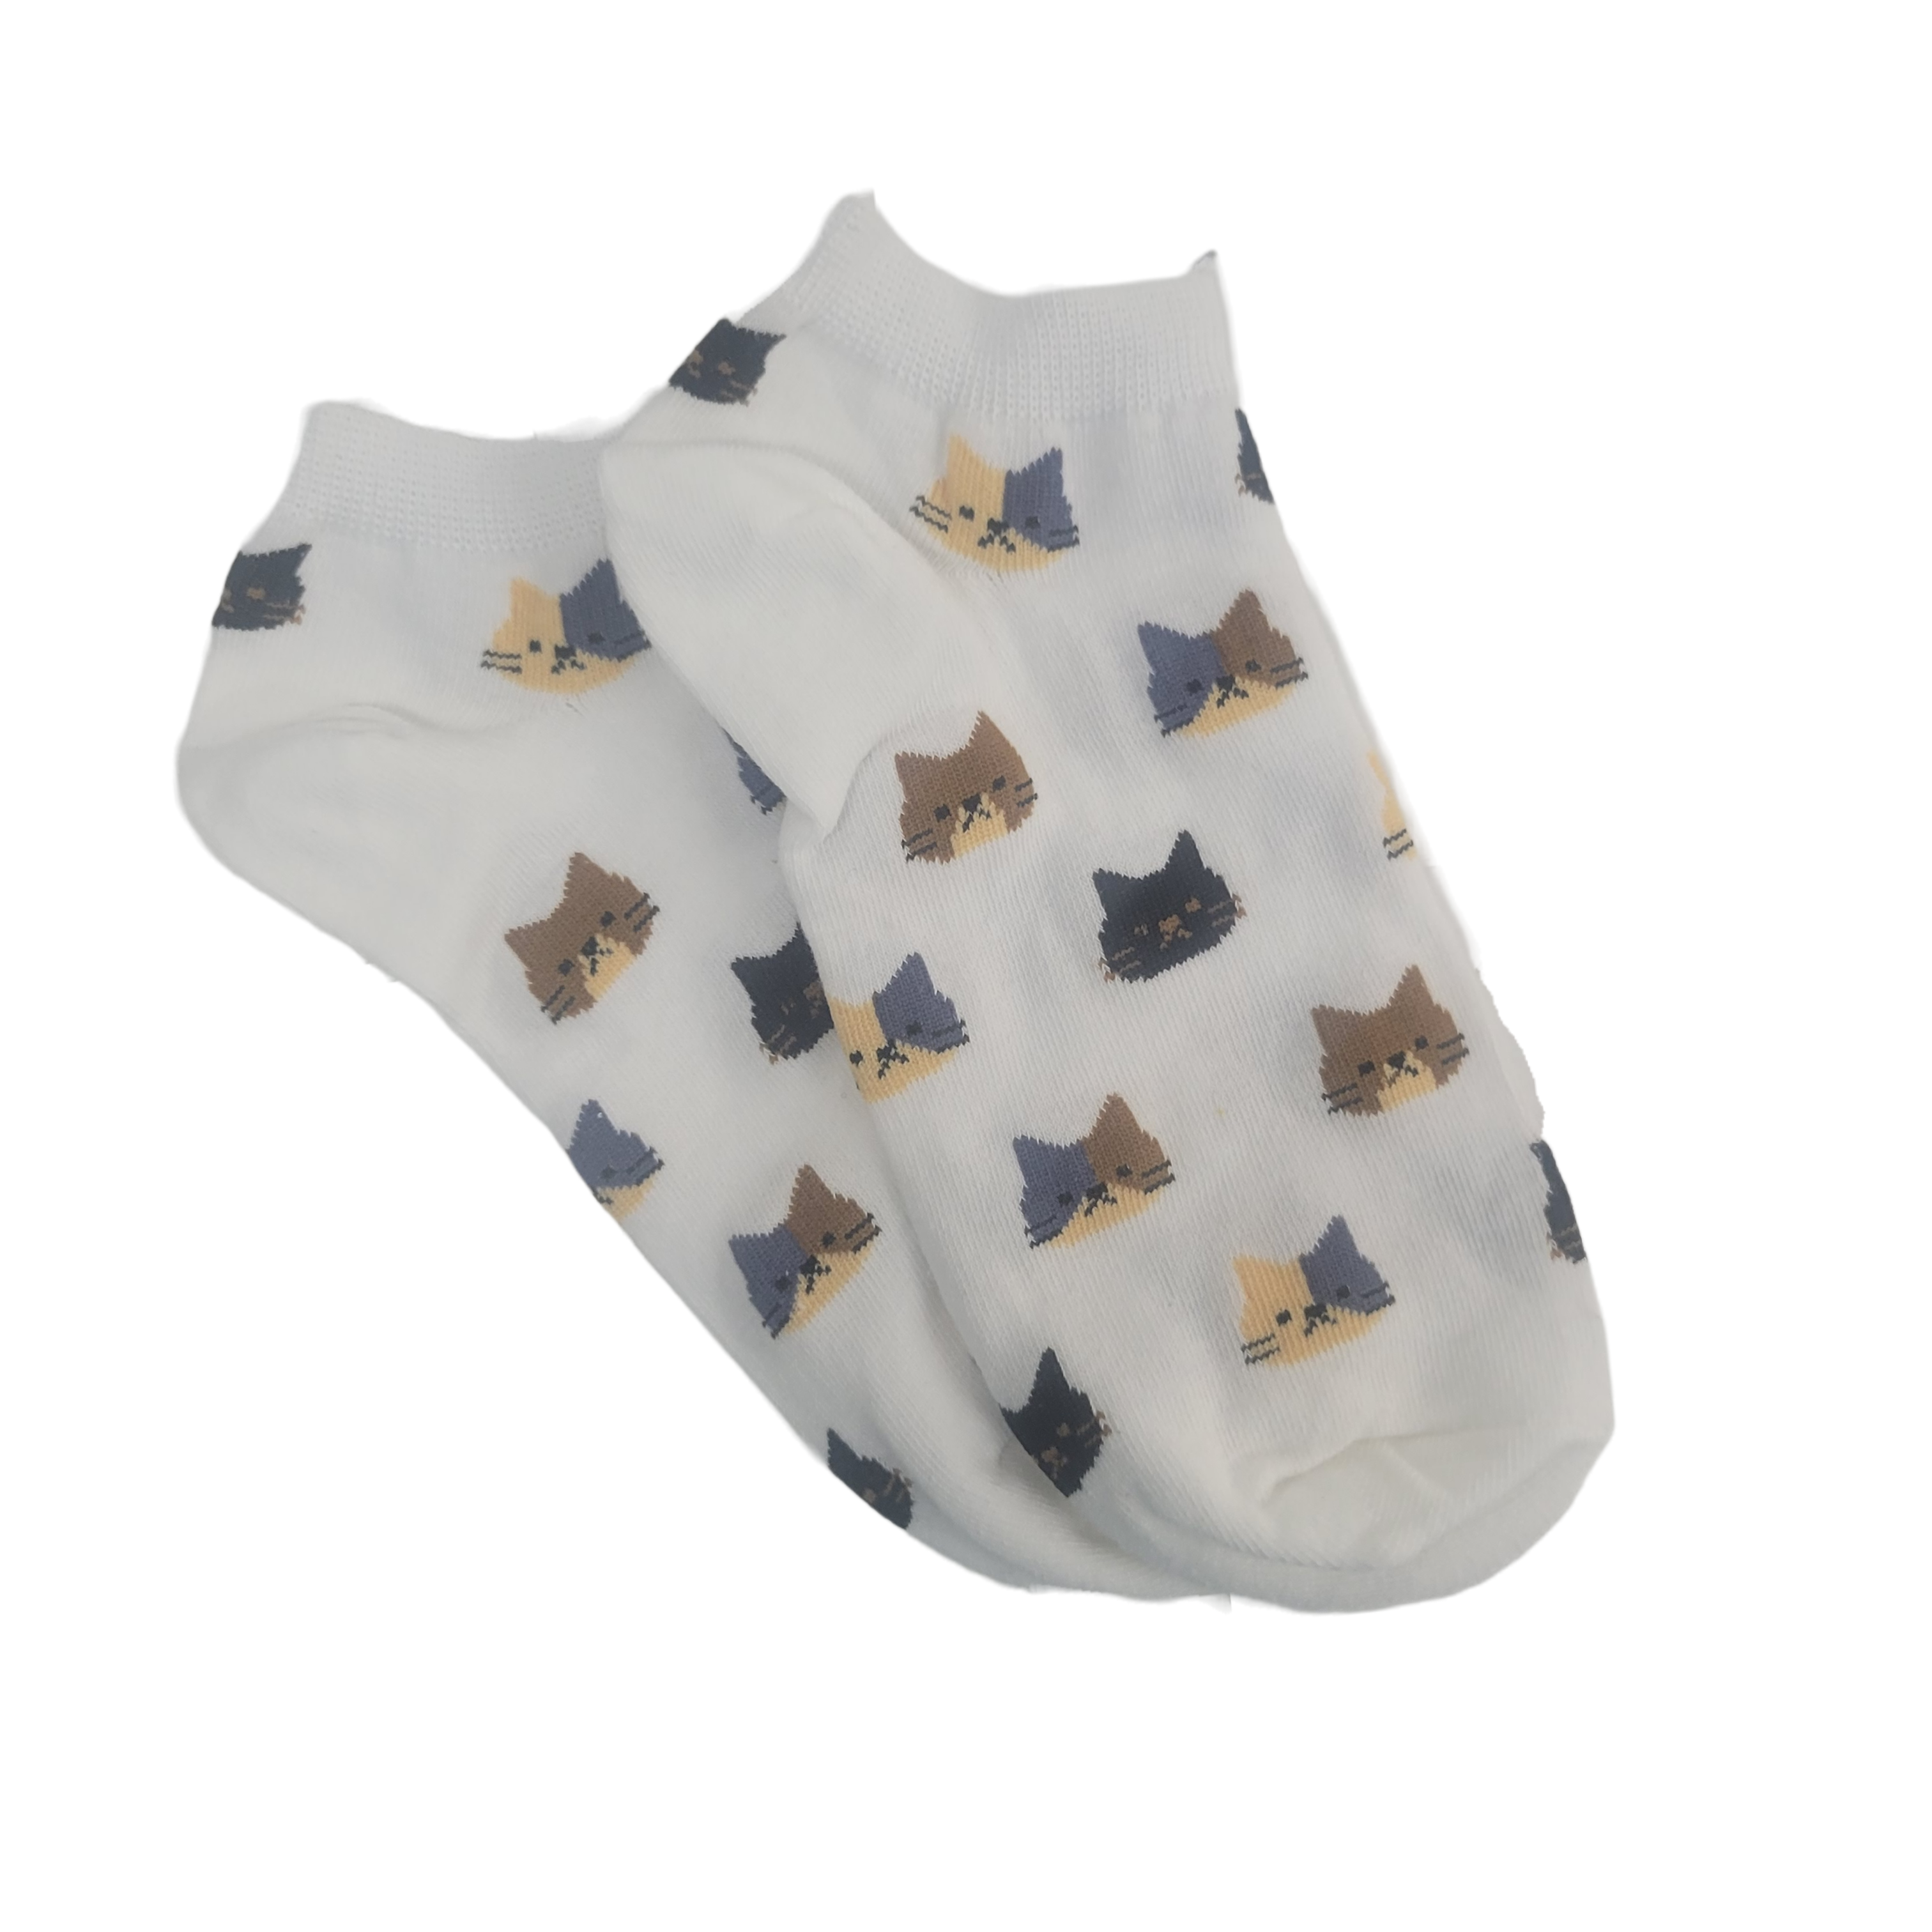 Kitty Cat Face Patterned Short Ankle Socks (Adult Medium)